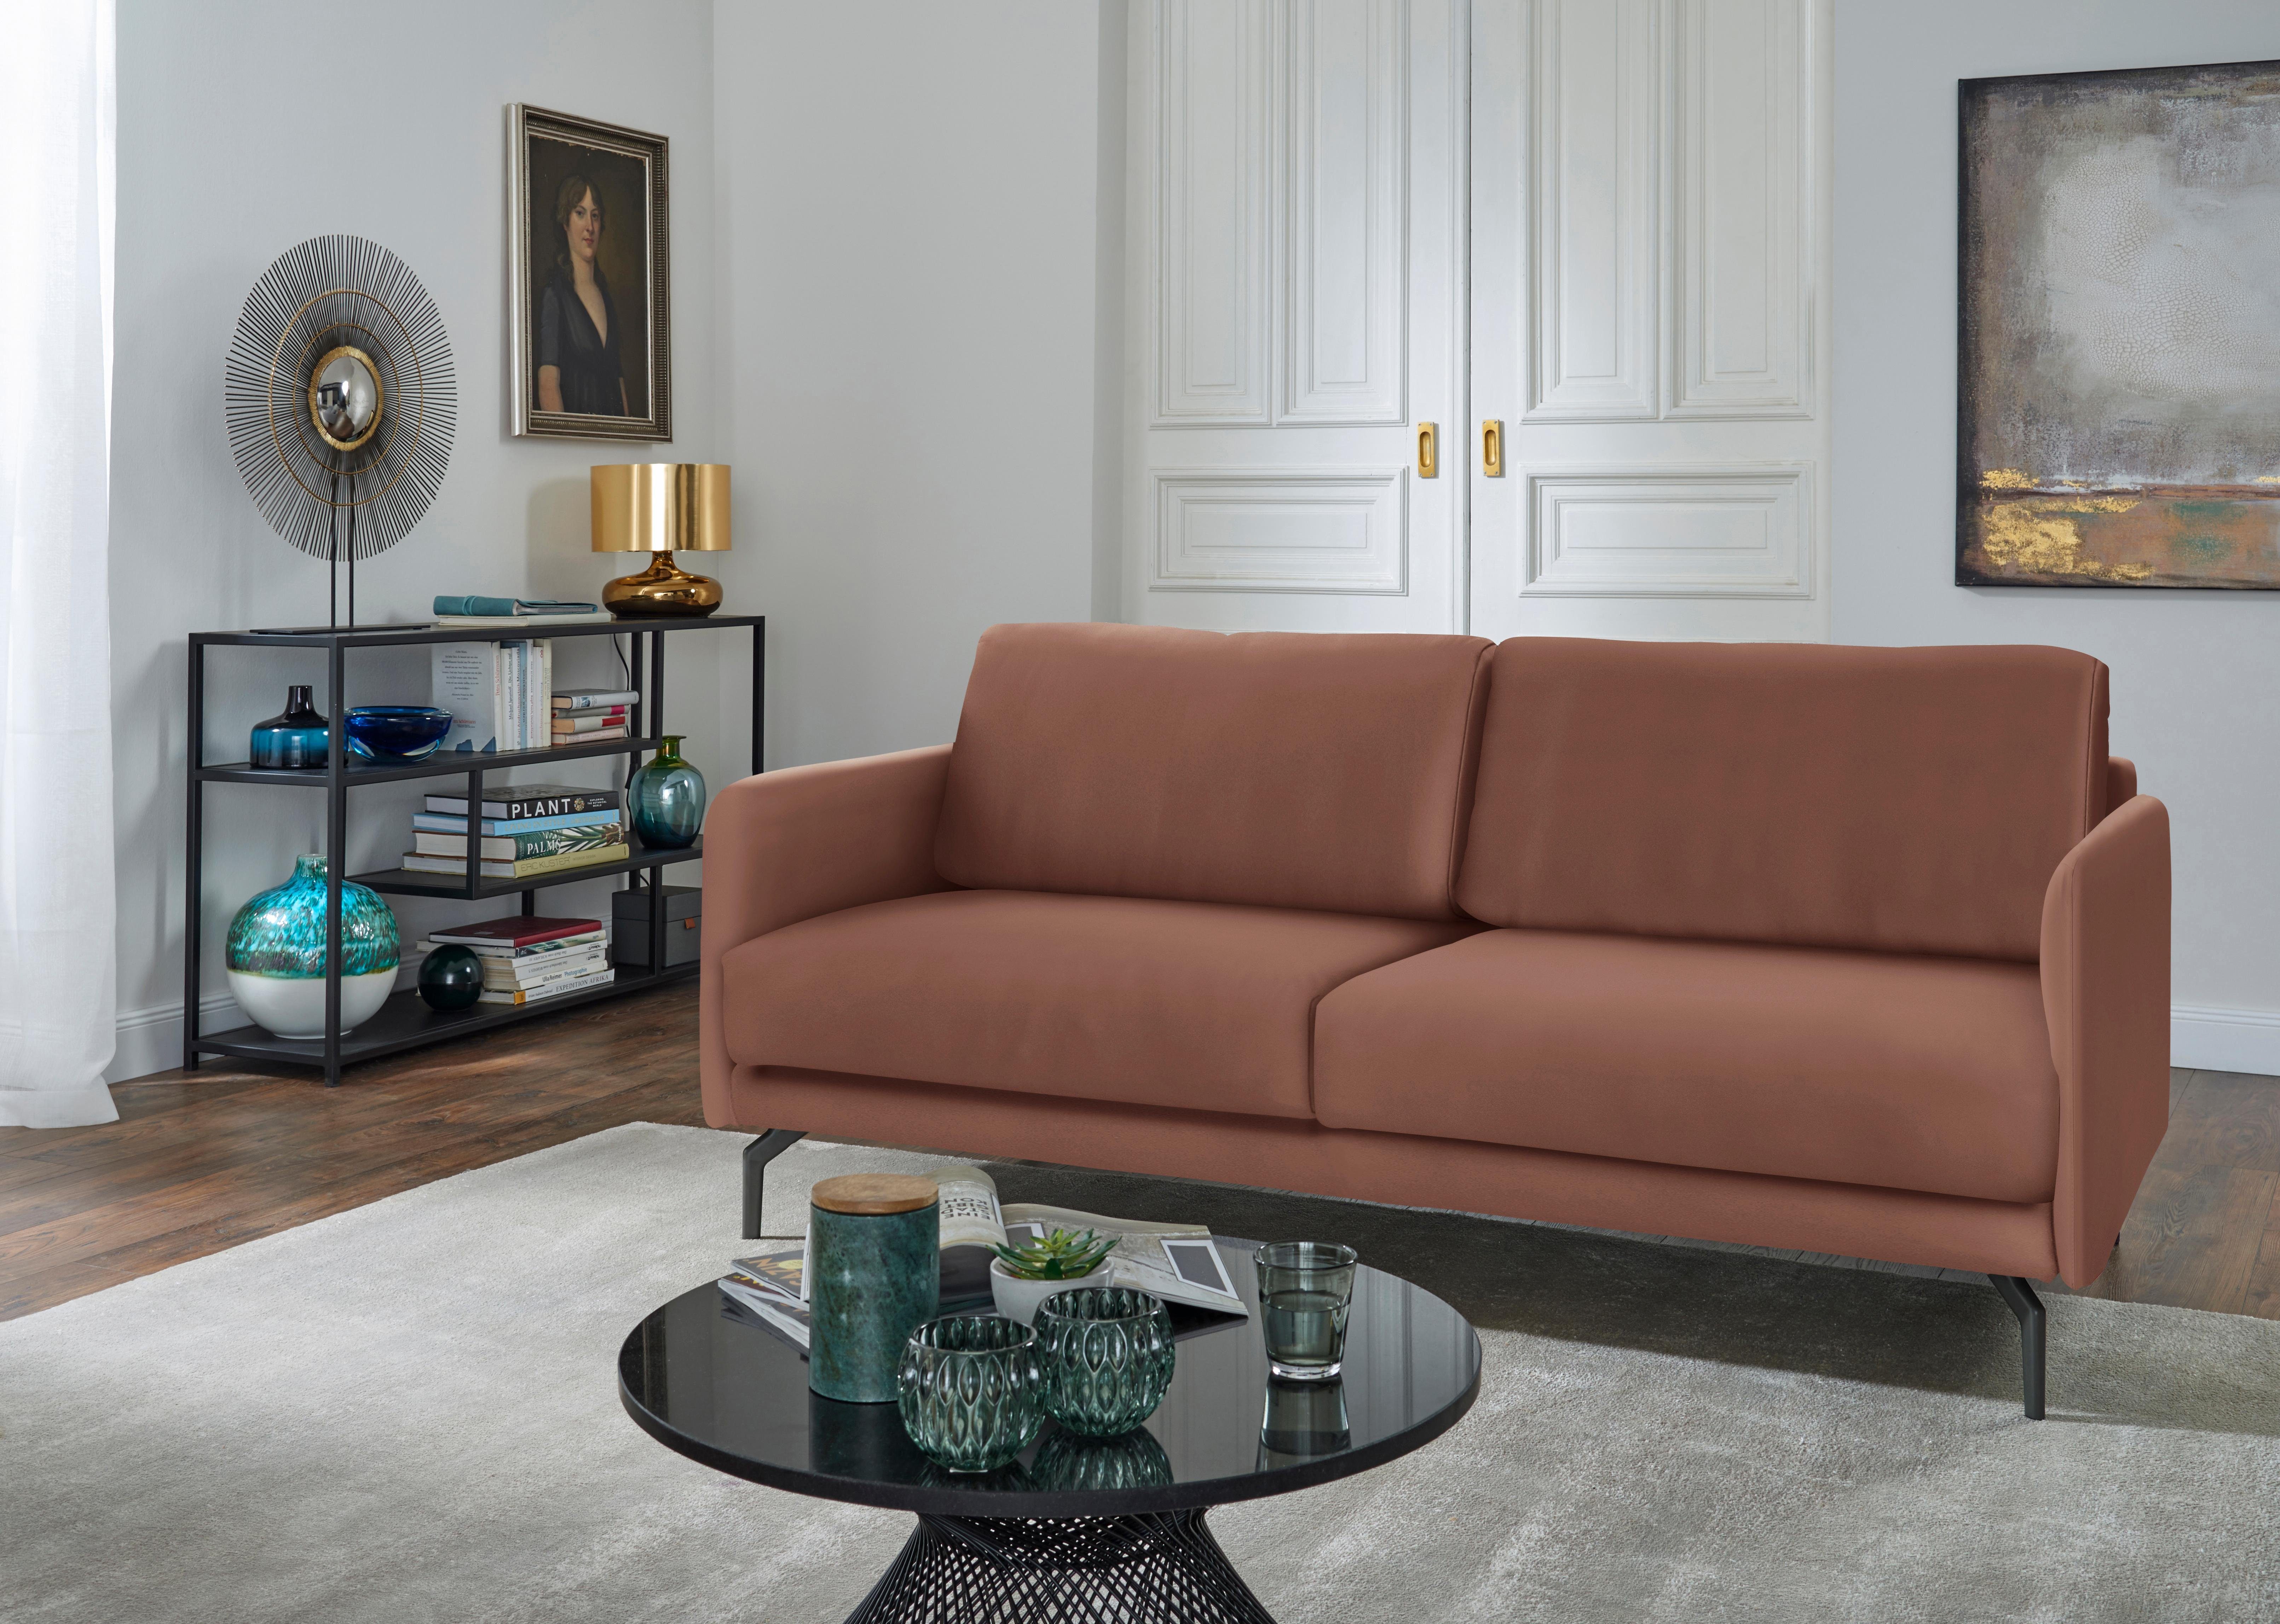 sofa hülsta sehr umbragrau, hs.450, Breite 150 Armlehne Alugussfüße in 2-Sitzer cm schmal,